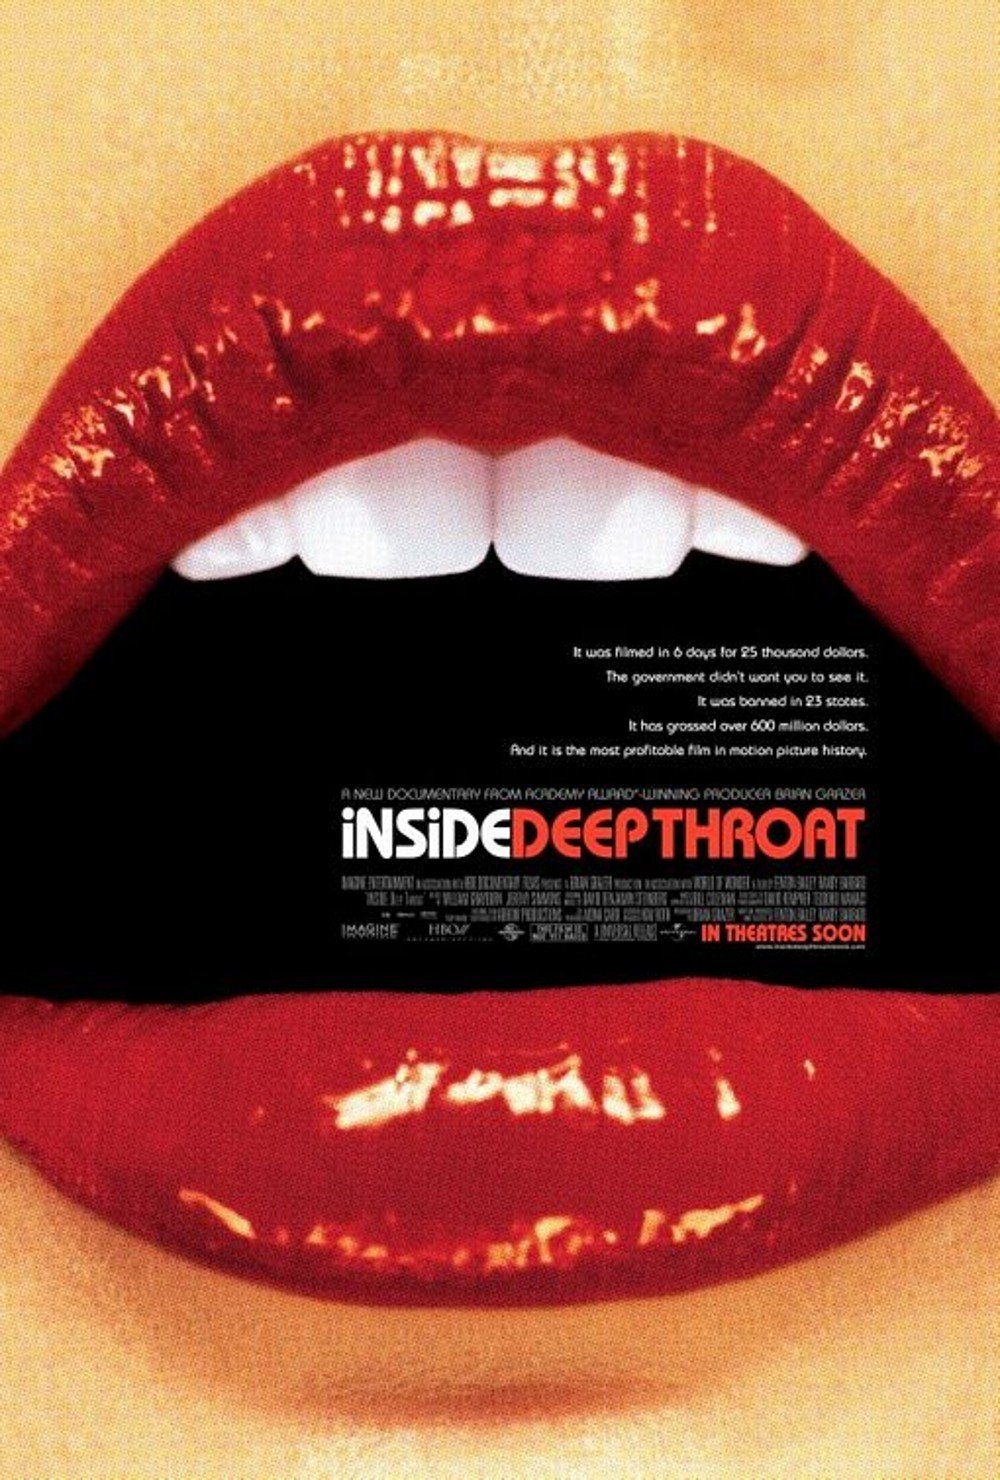 Plakat von "Inside Deep Throat"